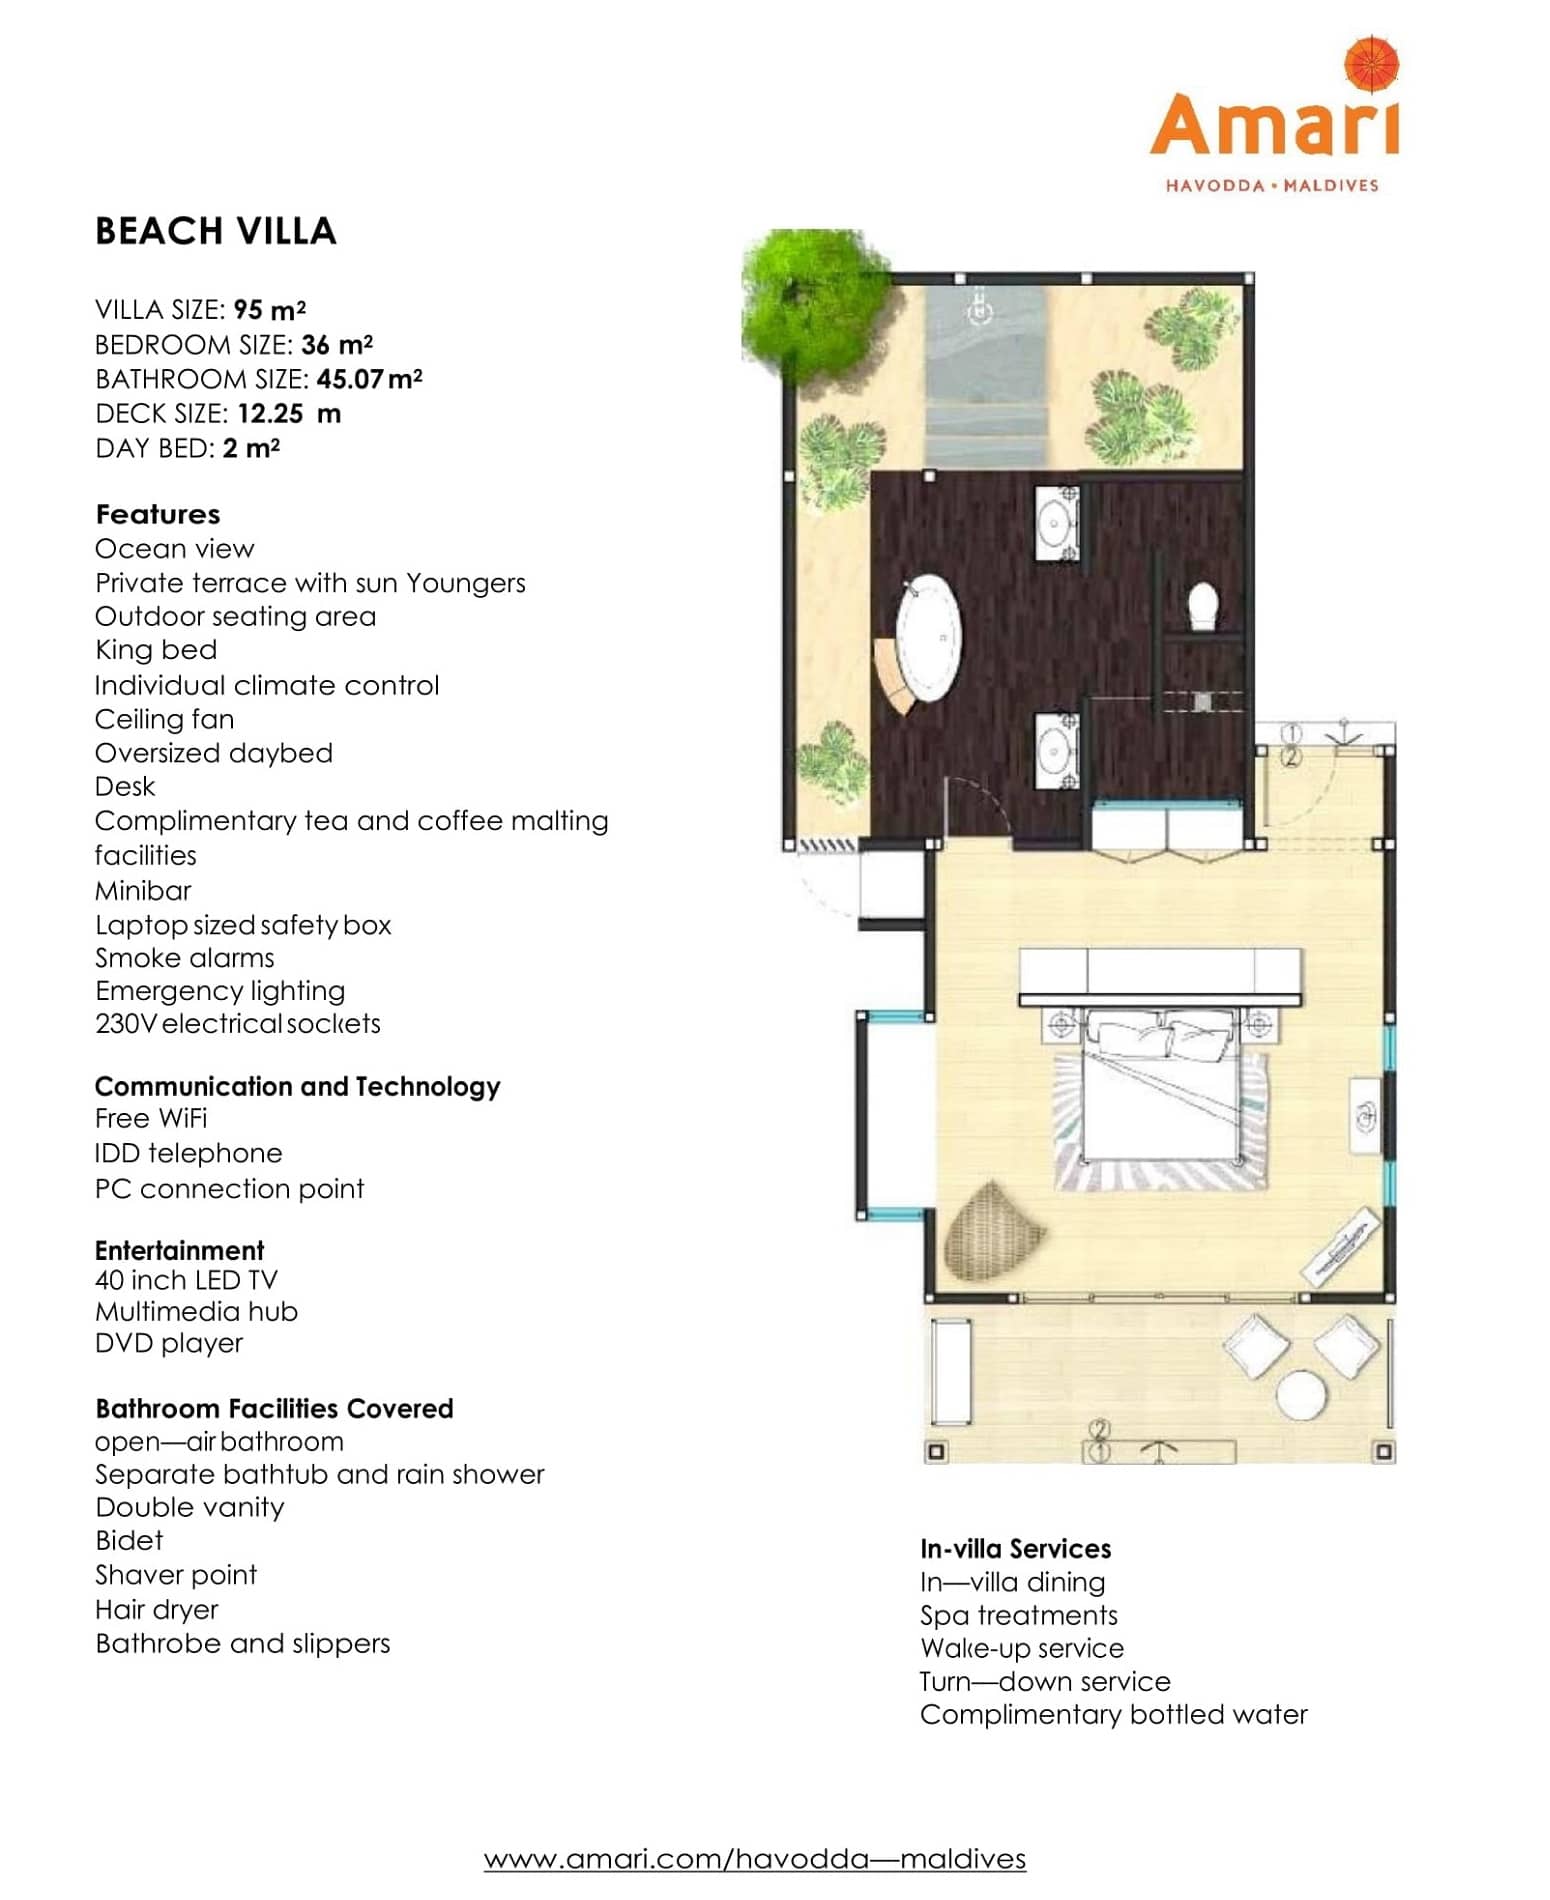 Amari Havodda Maldives Beach Villa Floor Plan 1